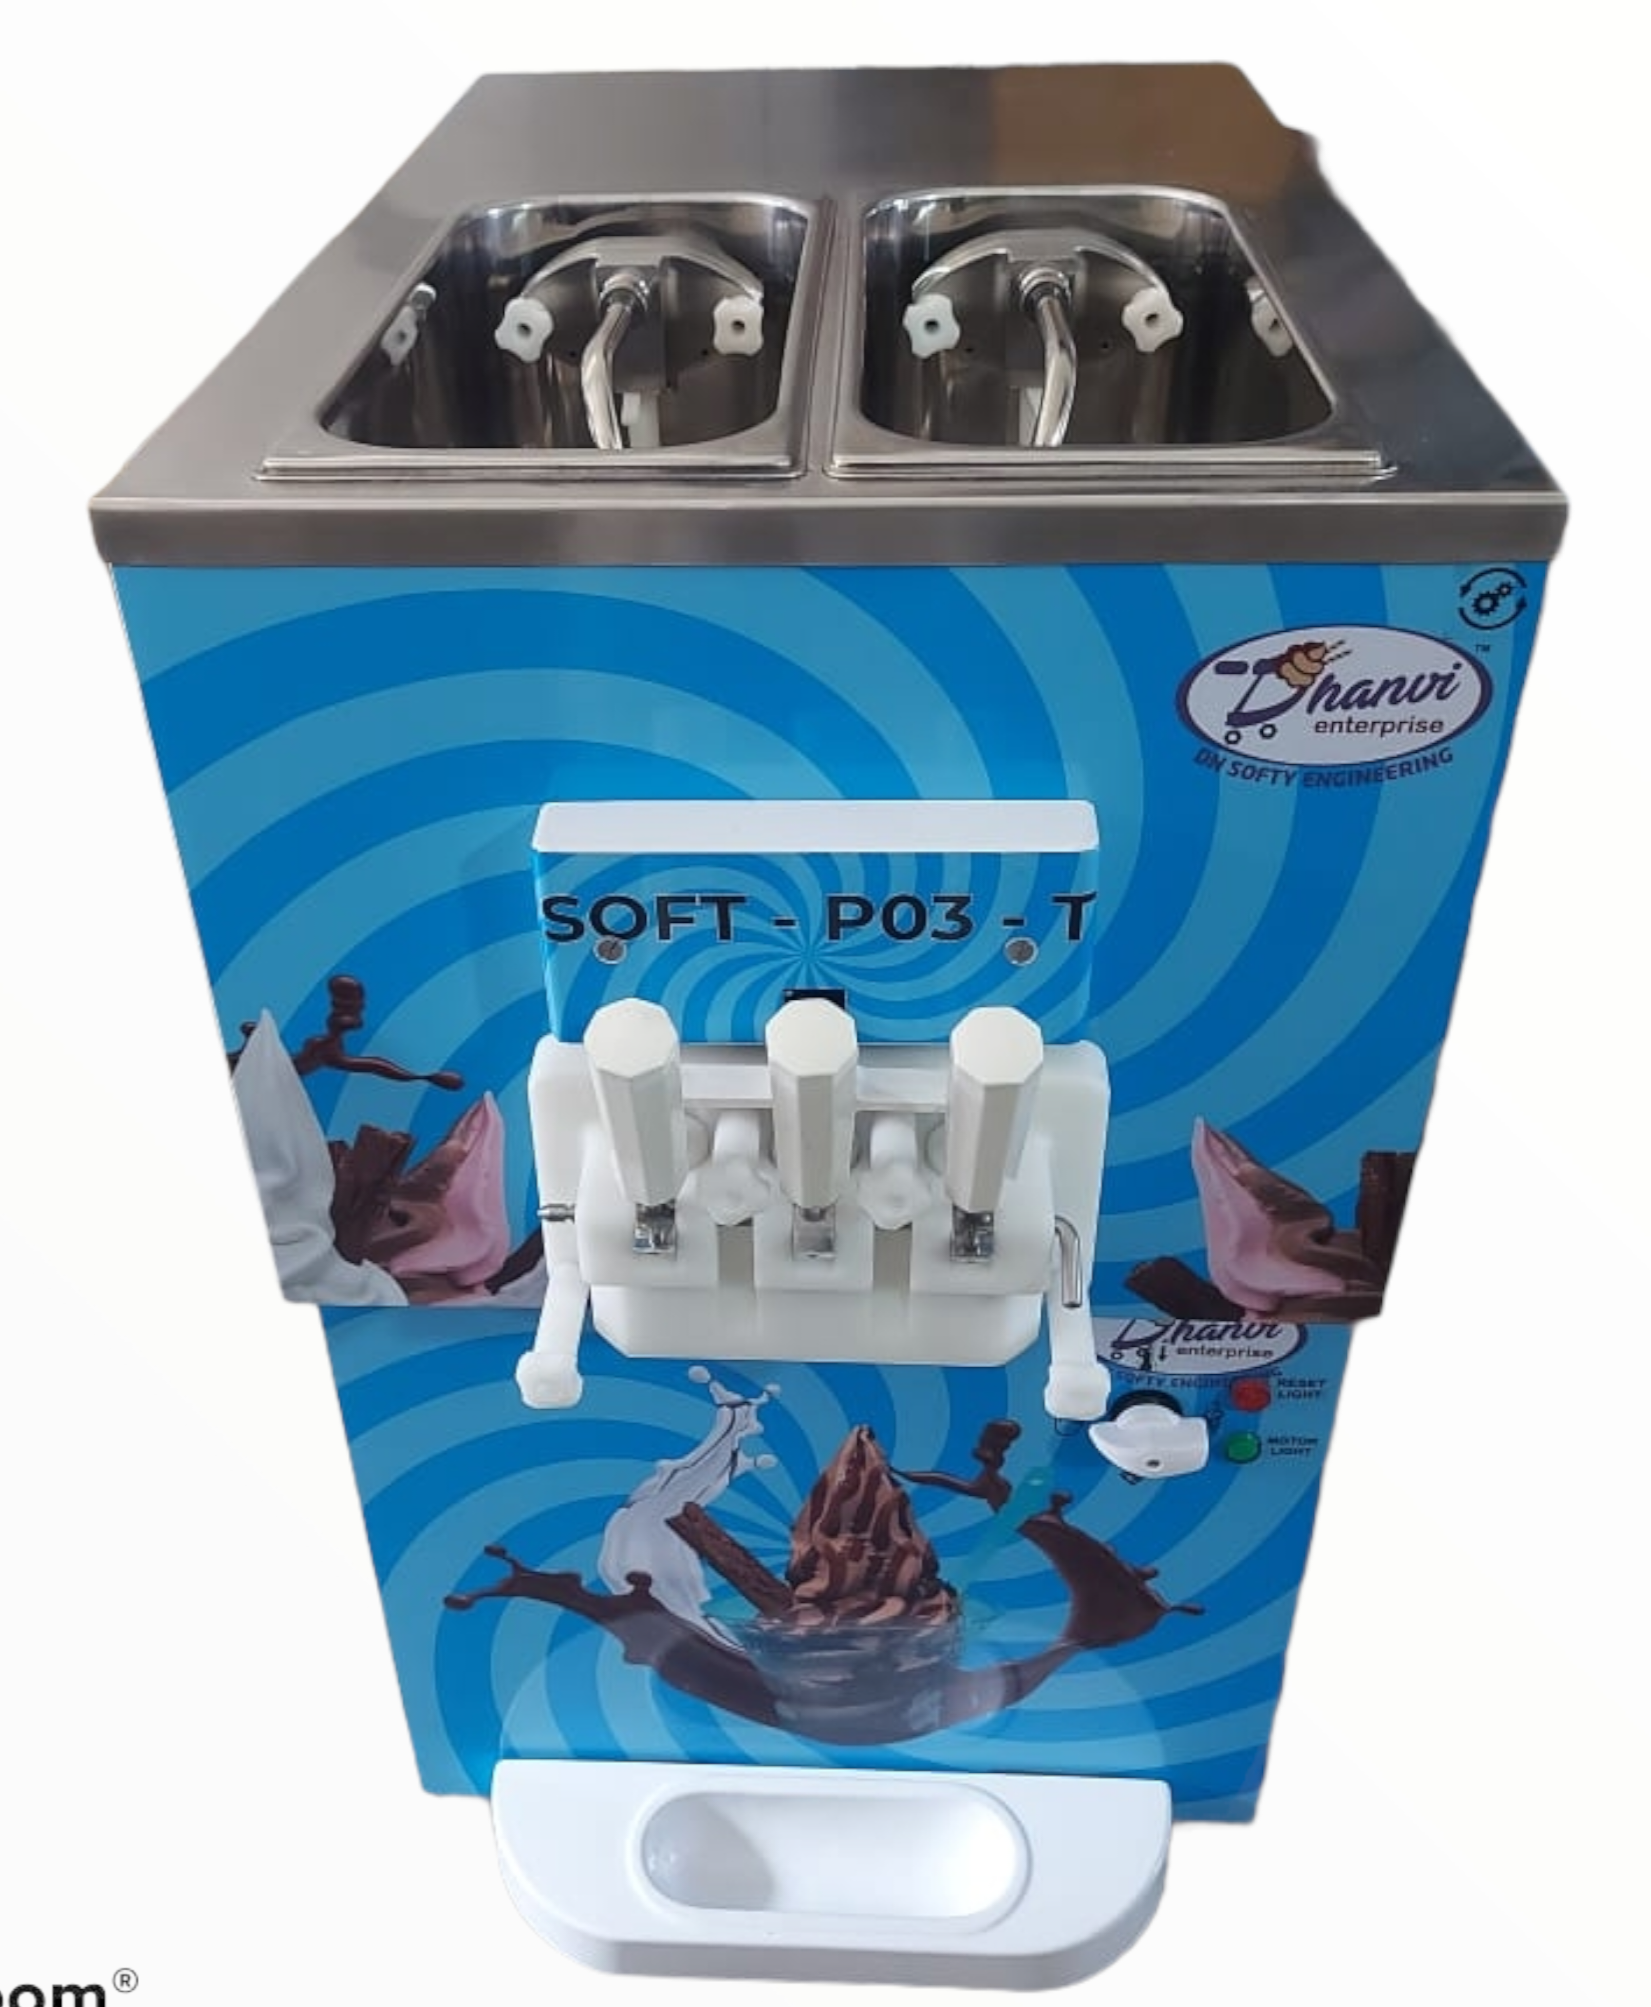 SOFT-P03-T Softy Ice Cream Machine